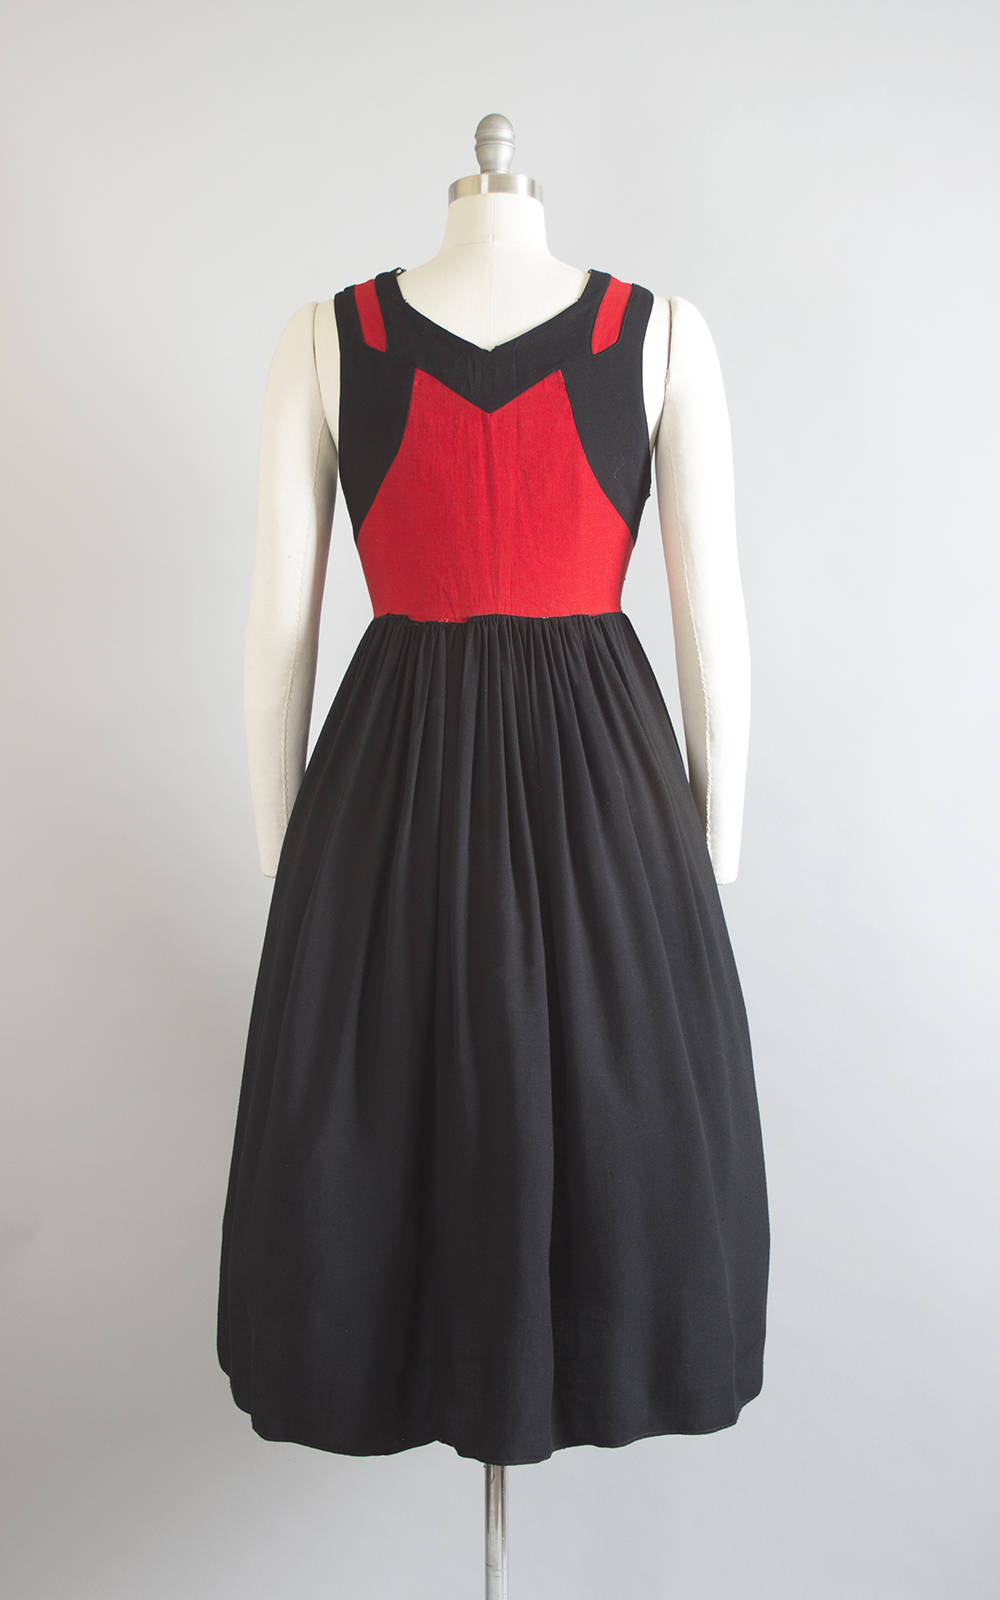 Vintage 1950s 1960s Dress | 50s 60s Traditional German Dirndl Cotton Lace Up Oktoberfest Red Black Full Skirt Folk Sundress (large/xl)